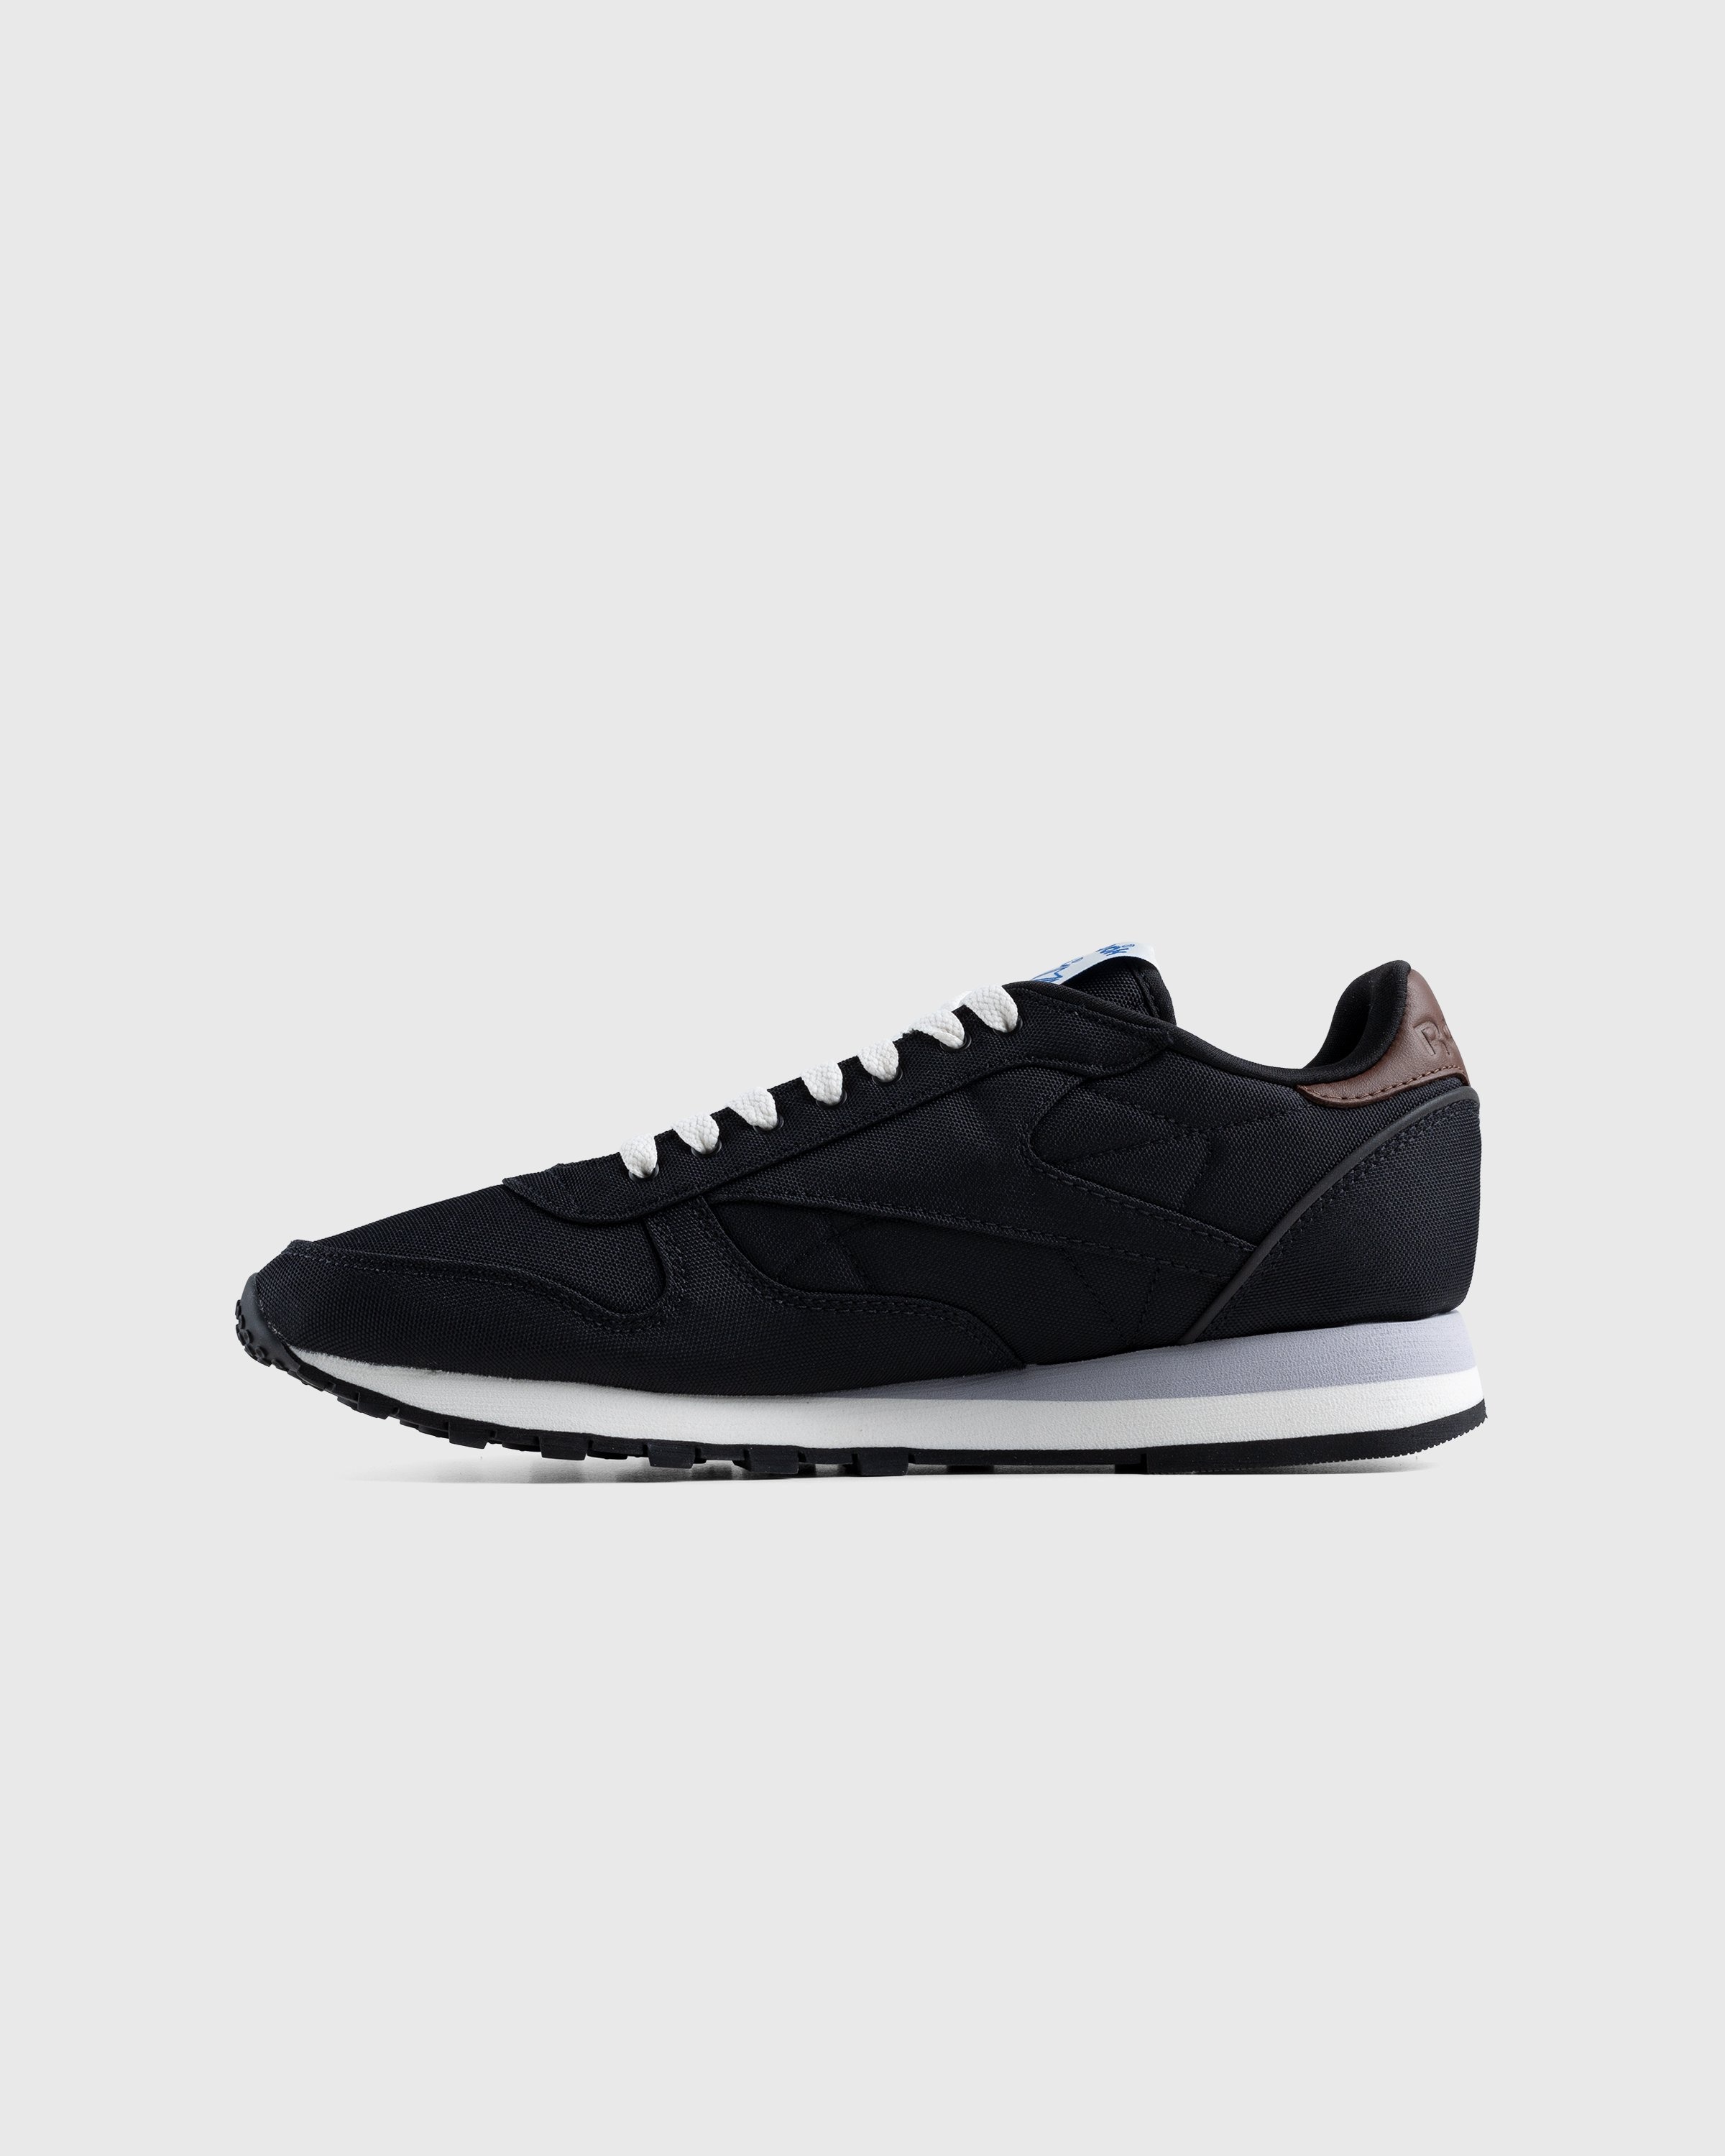 Reebok – Classic Leather Black/Chalk/Brown - Sneakers - Black - Image 3